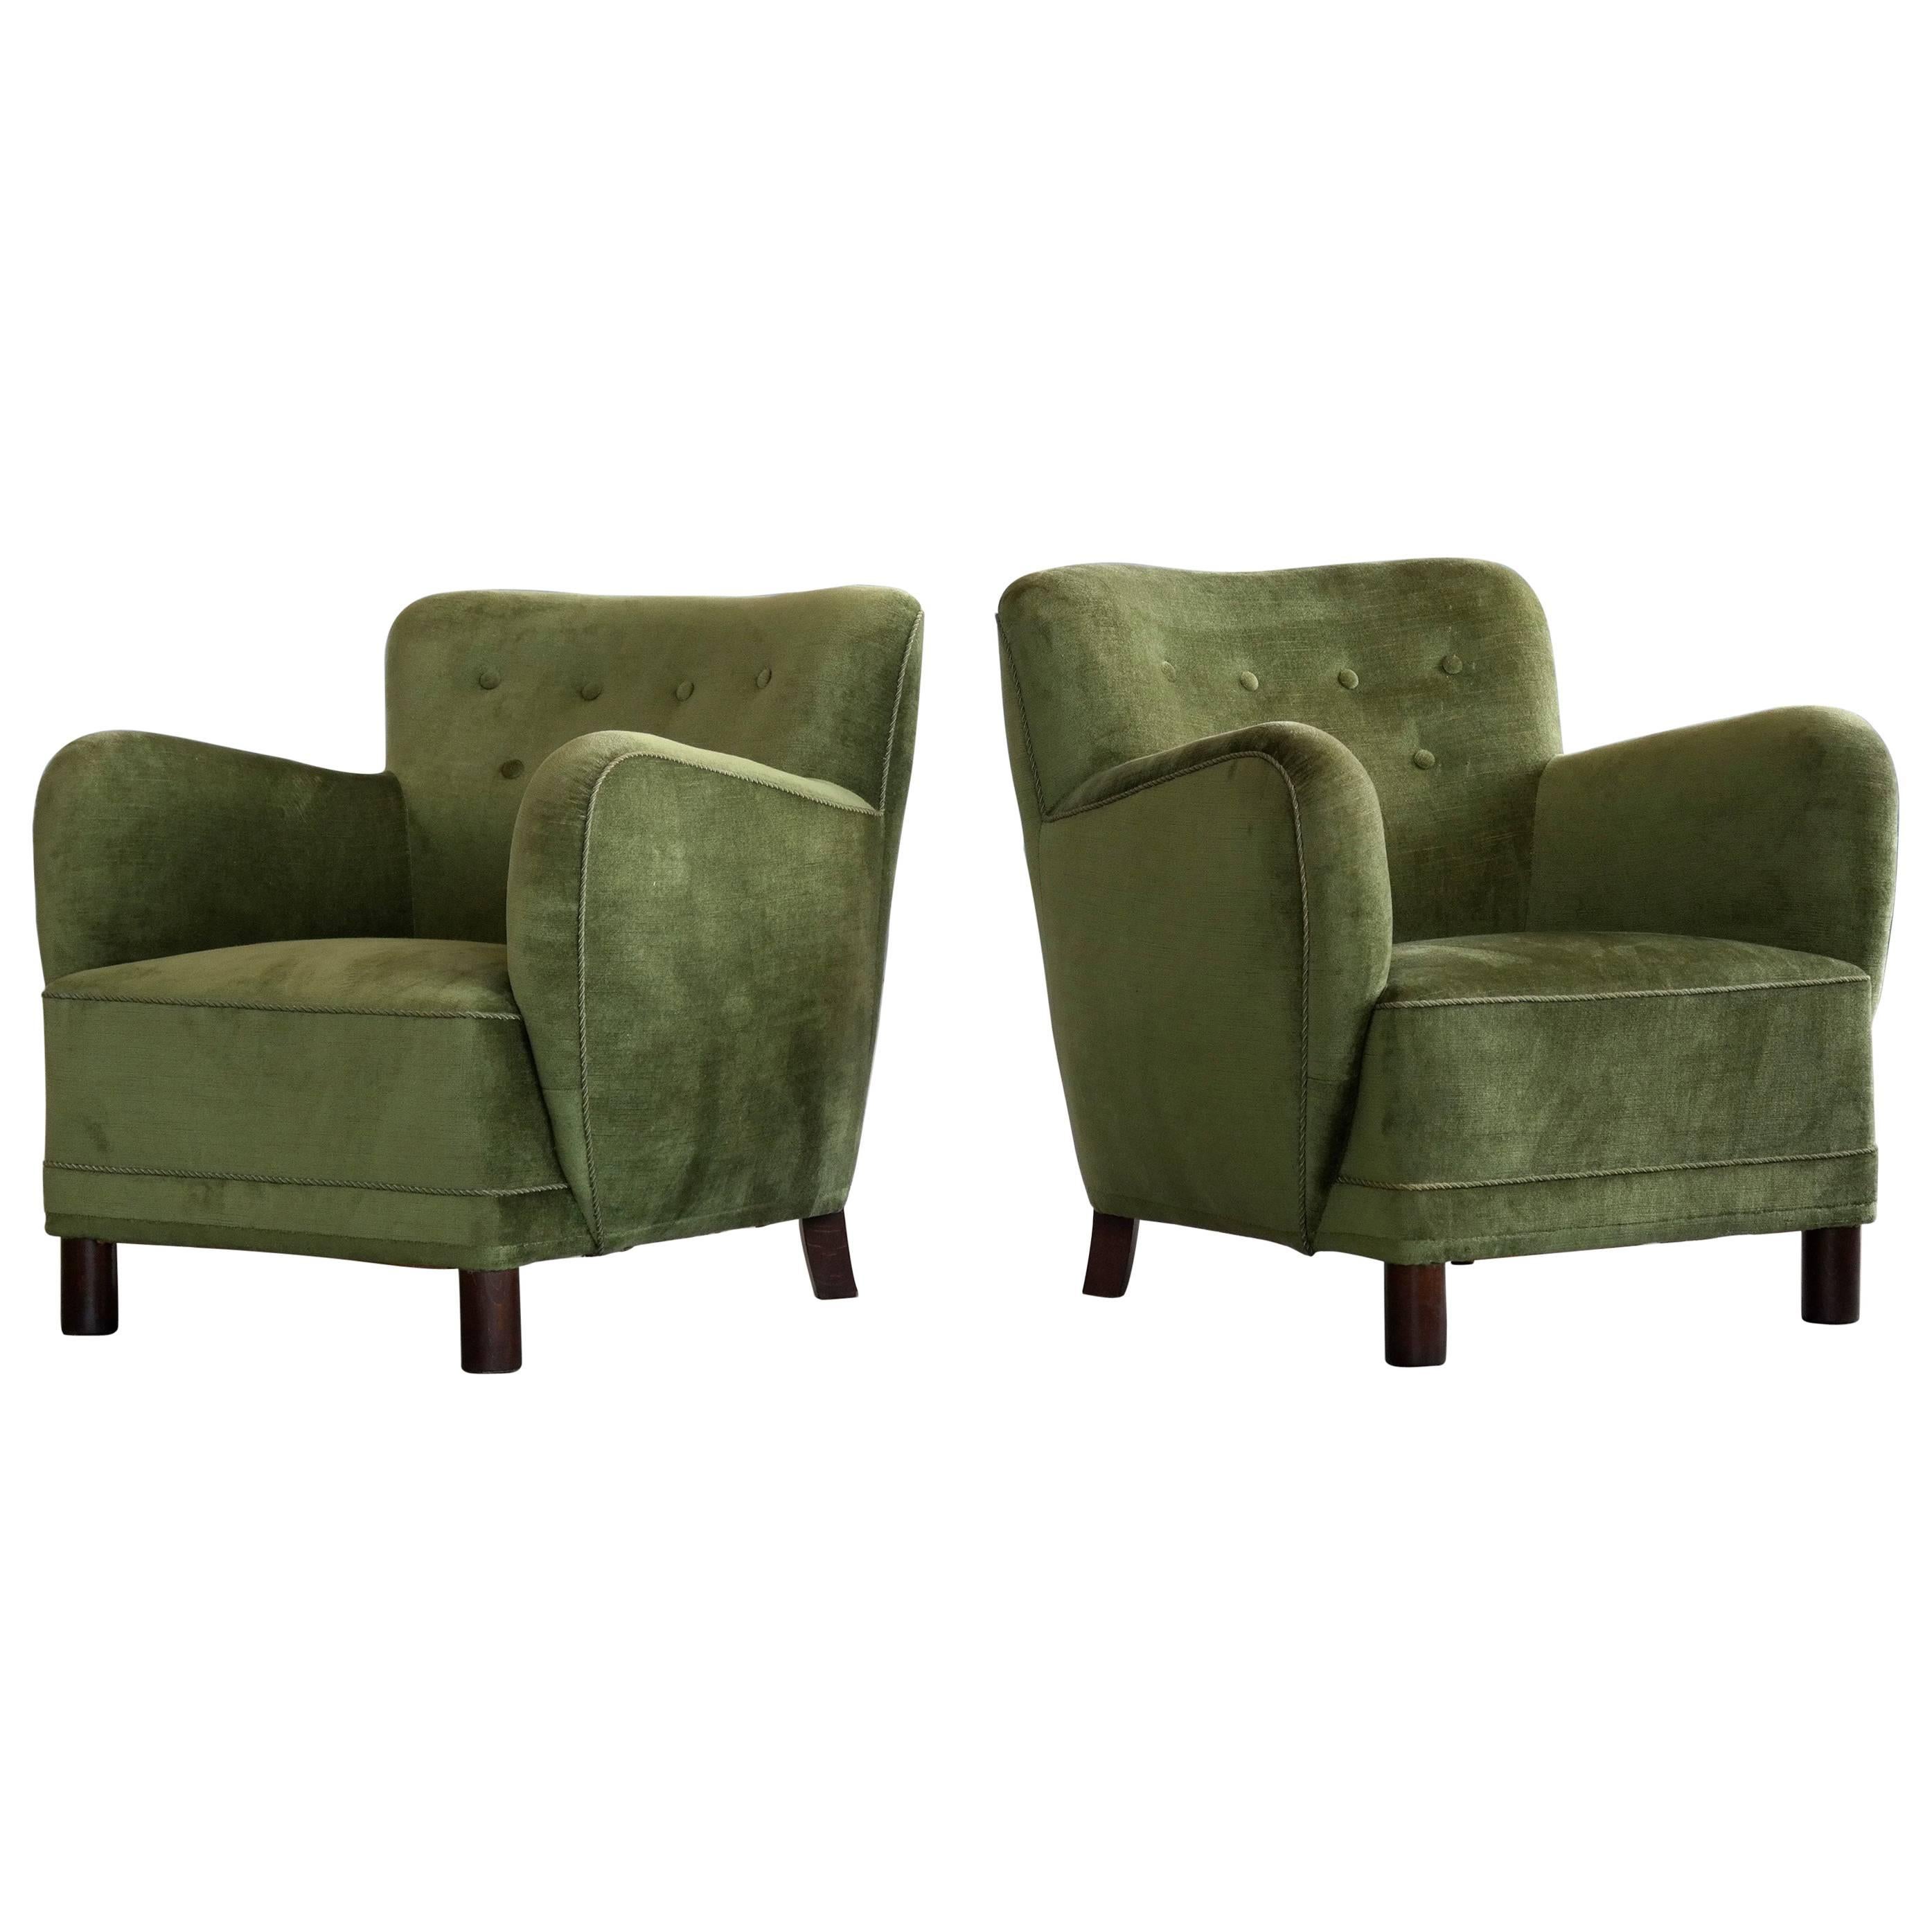 Danish 1940s Mogens Lassen Attributed Pair of Low Lounge Chairs in Mohair Velvet